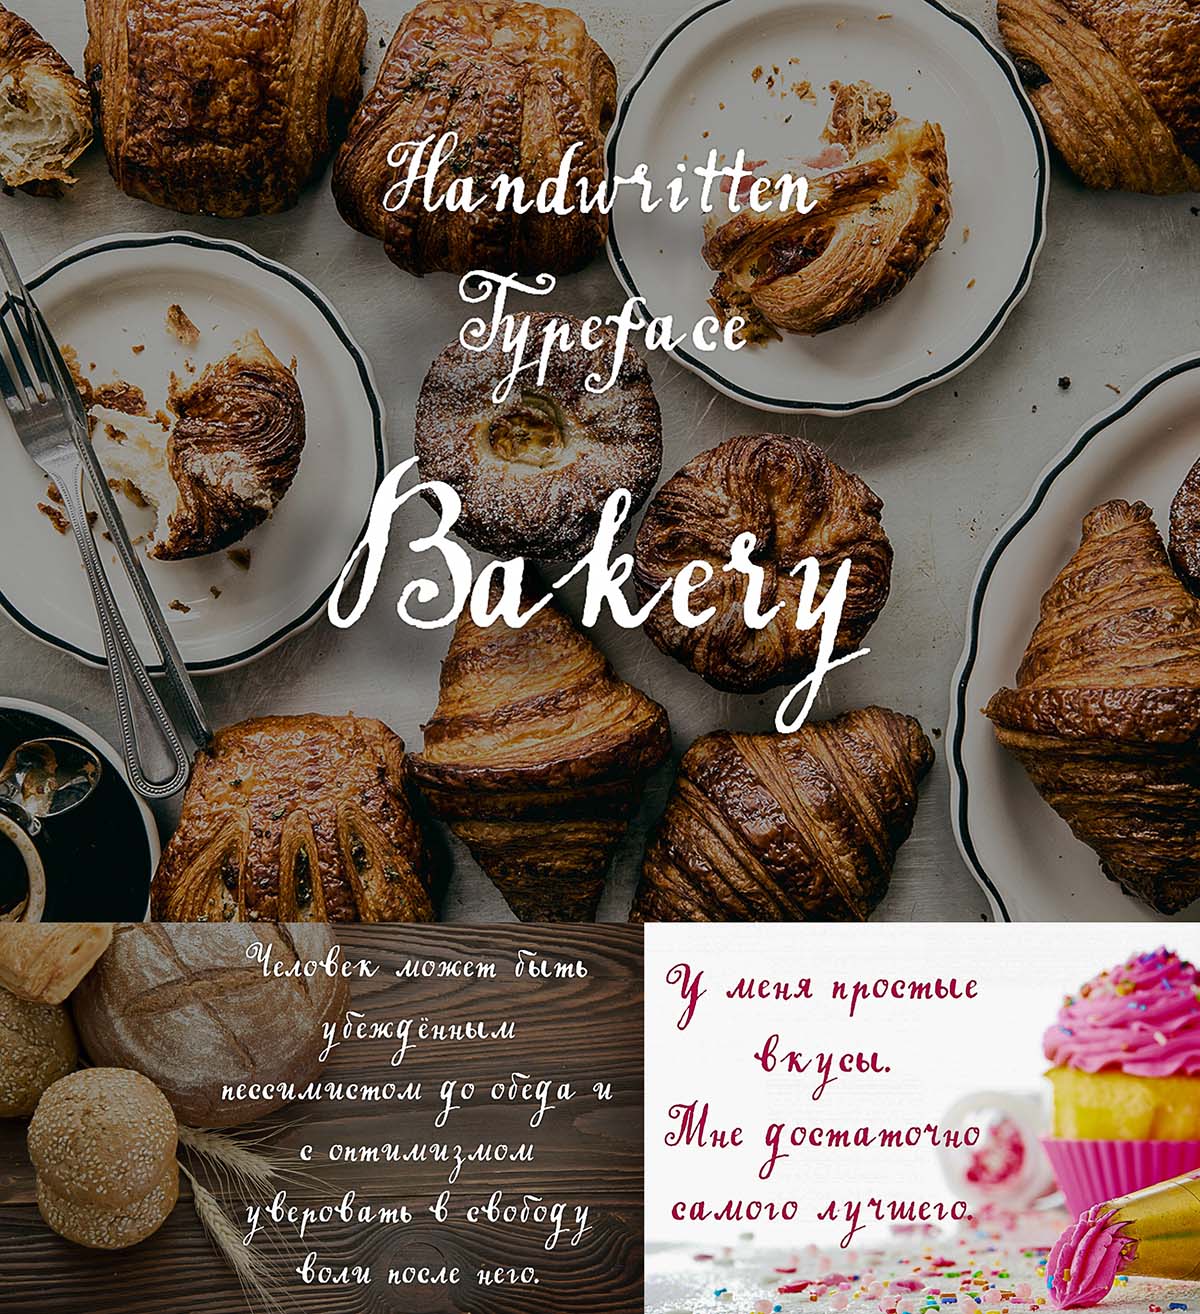 Bakery Cyrillic Handwritten Typeface Free Download